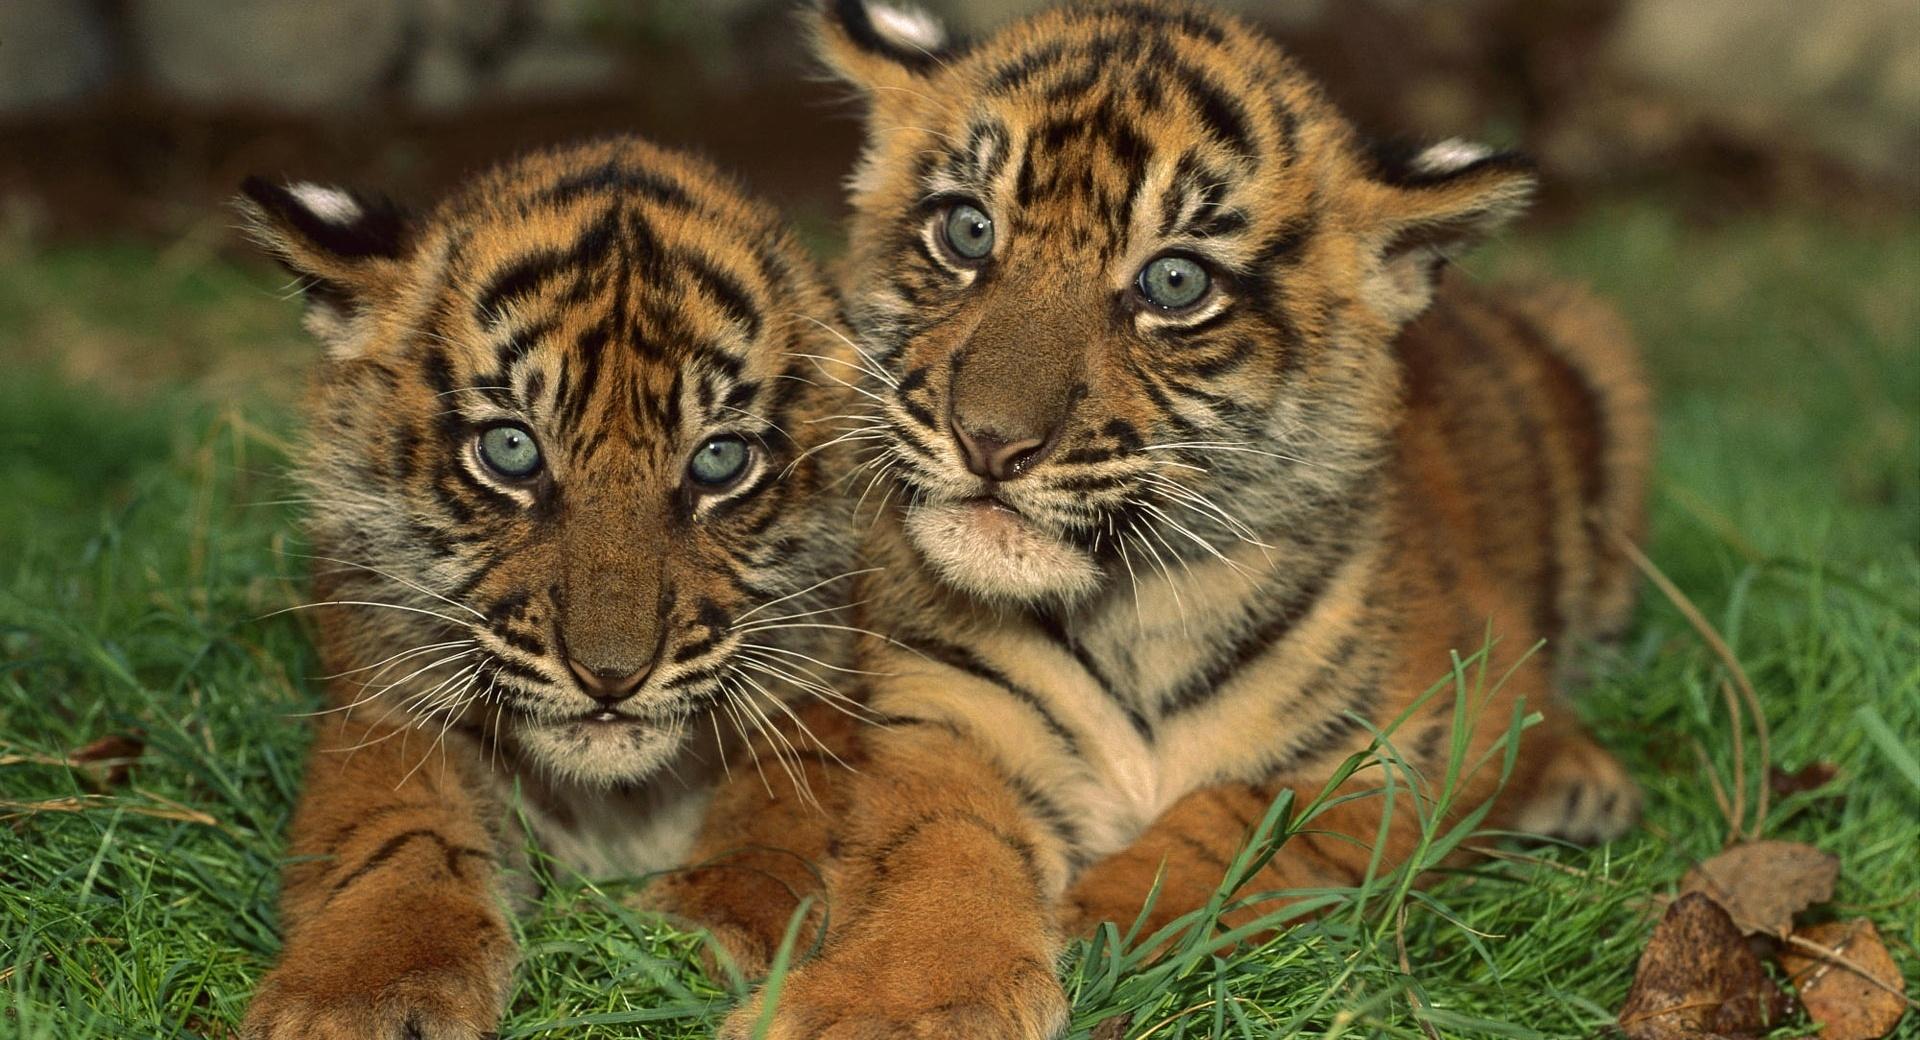 Sumatran Tiger Cubs at 1280 x 960 size wallpapers HD quality